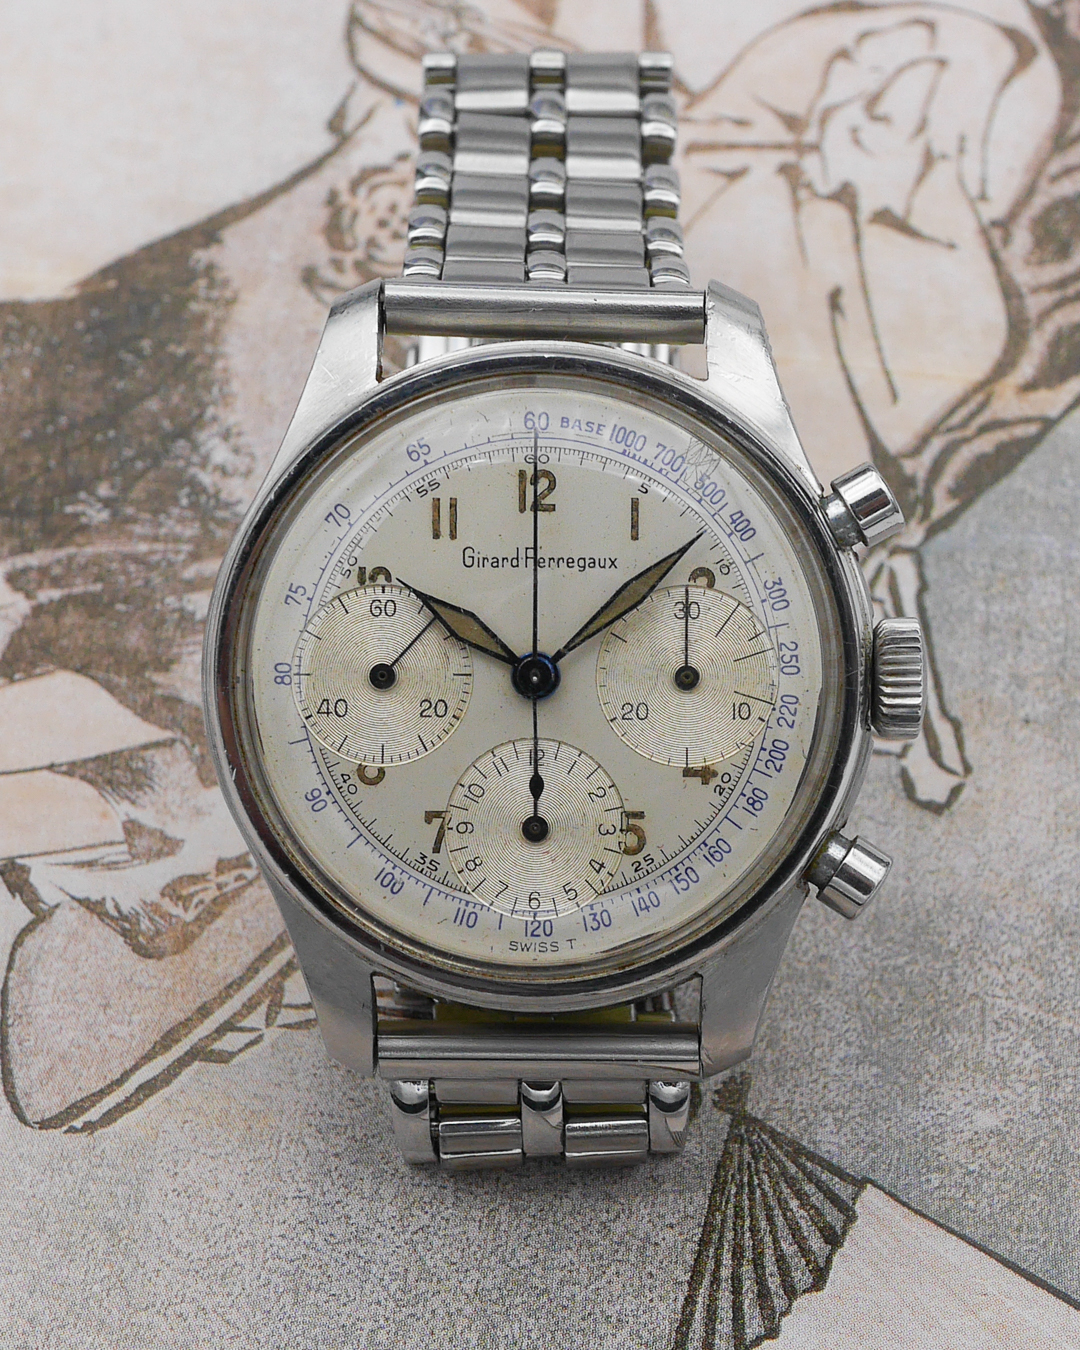 1950s Girard Perregaux chronograph with Valjoux 72 - Sabiwatches